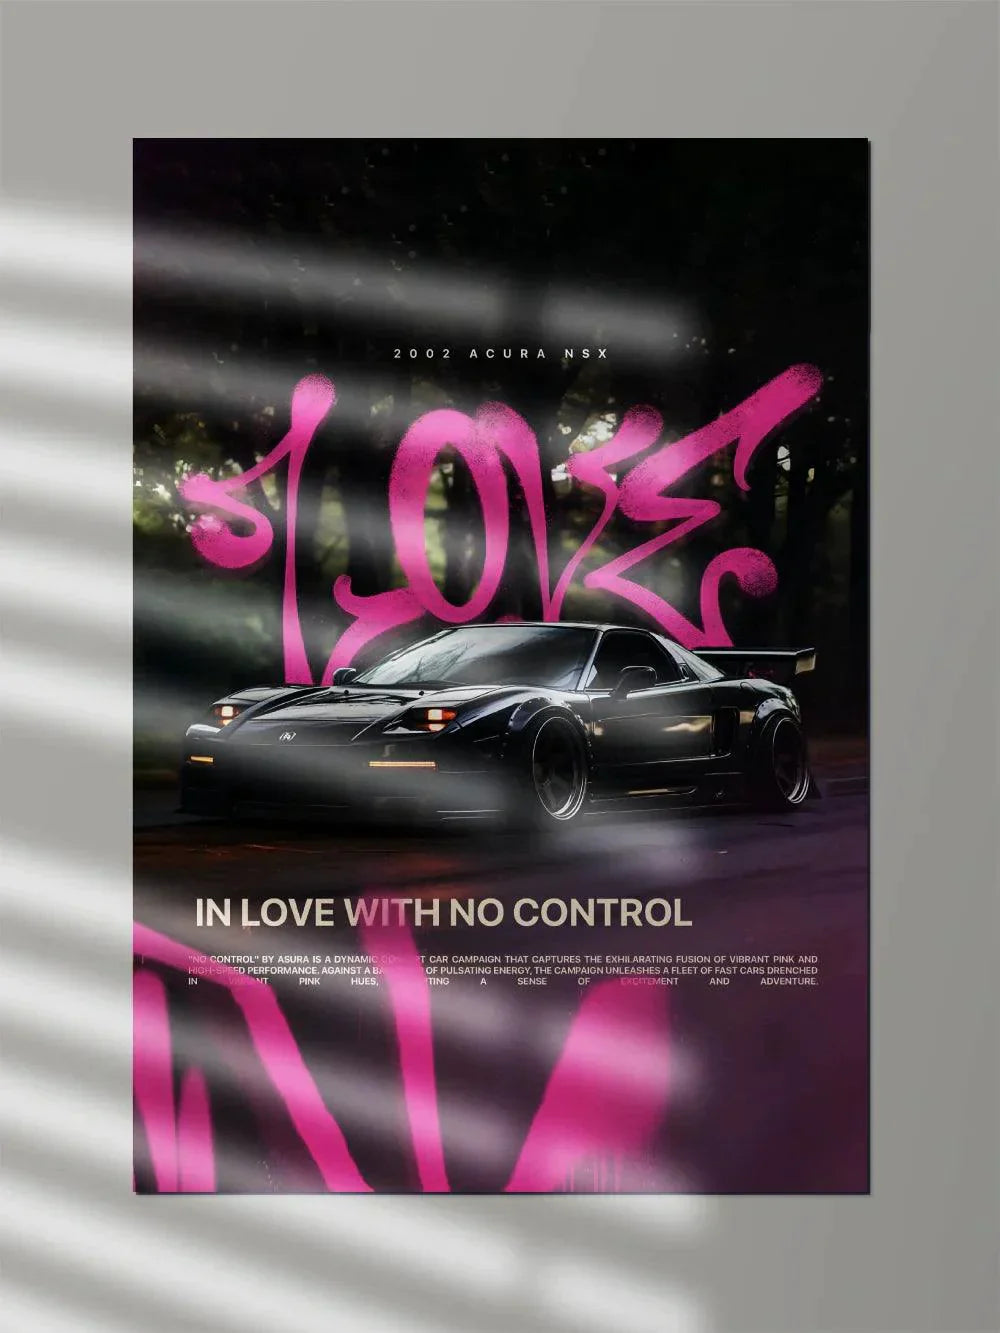 Acura NSX 2002 - Poster Wiz